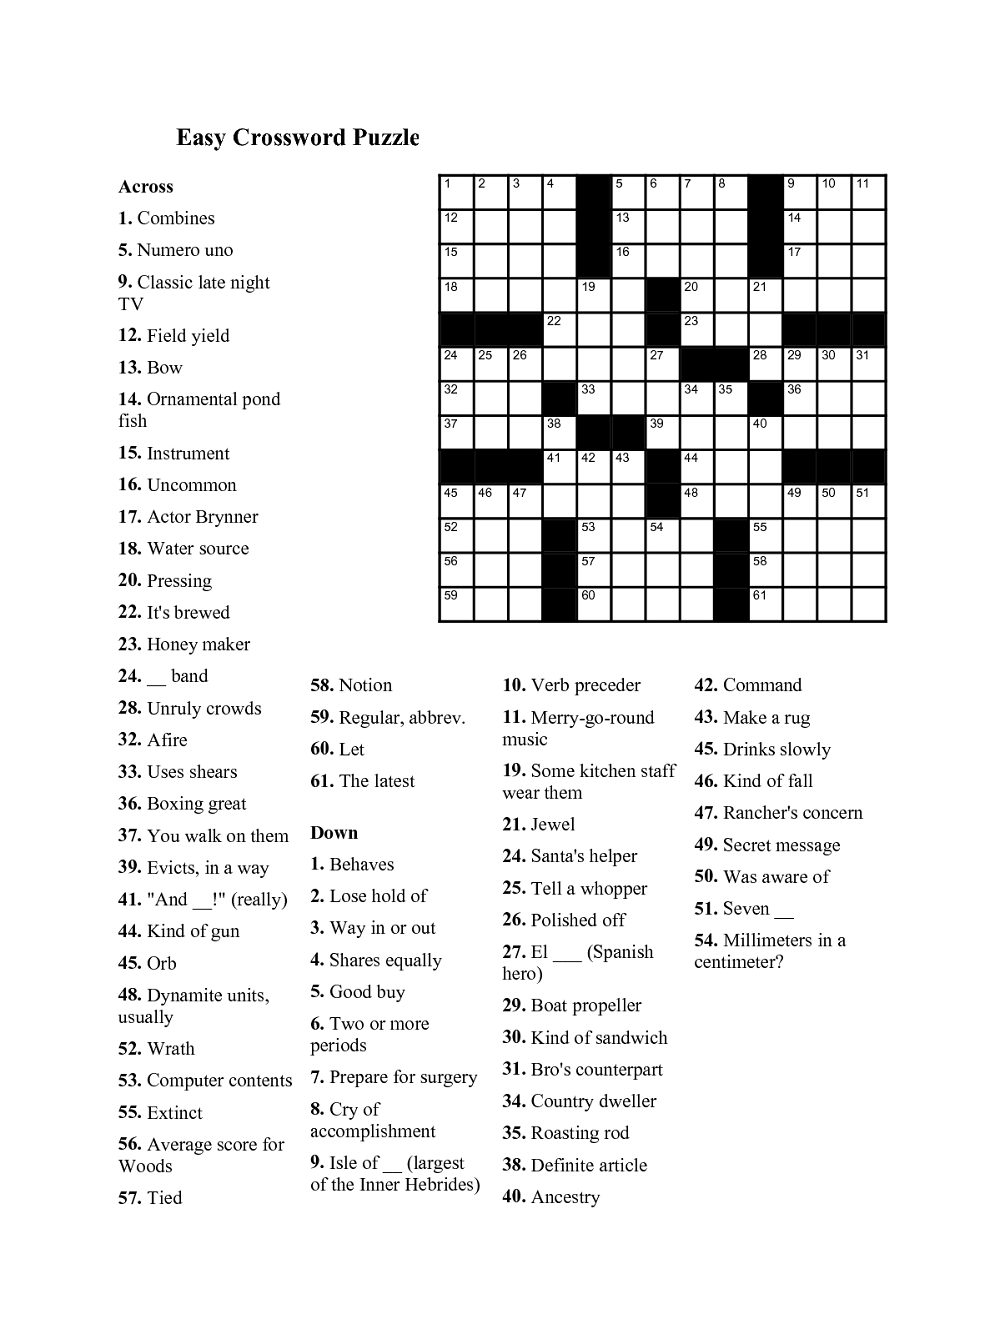 Easy Crossword Puzzles For Senior Activity | Kiddo Shelter - Easy Crossword Puzzles Printable For Kids